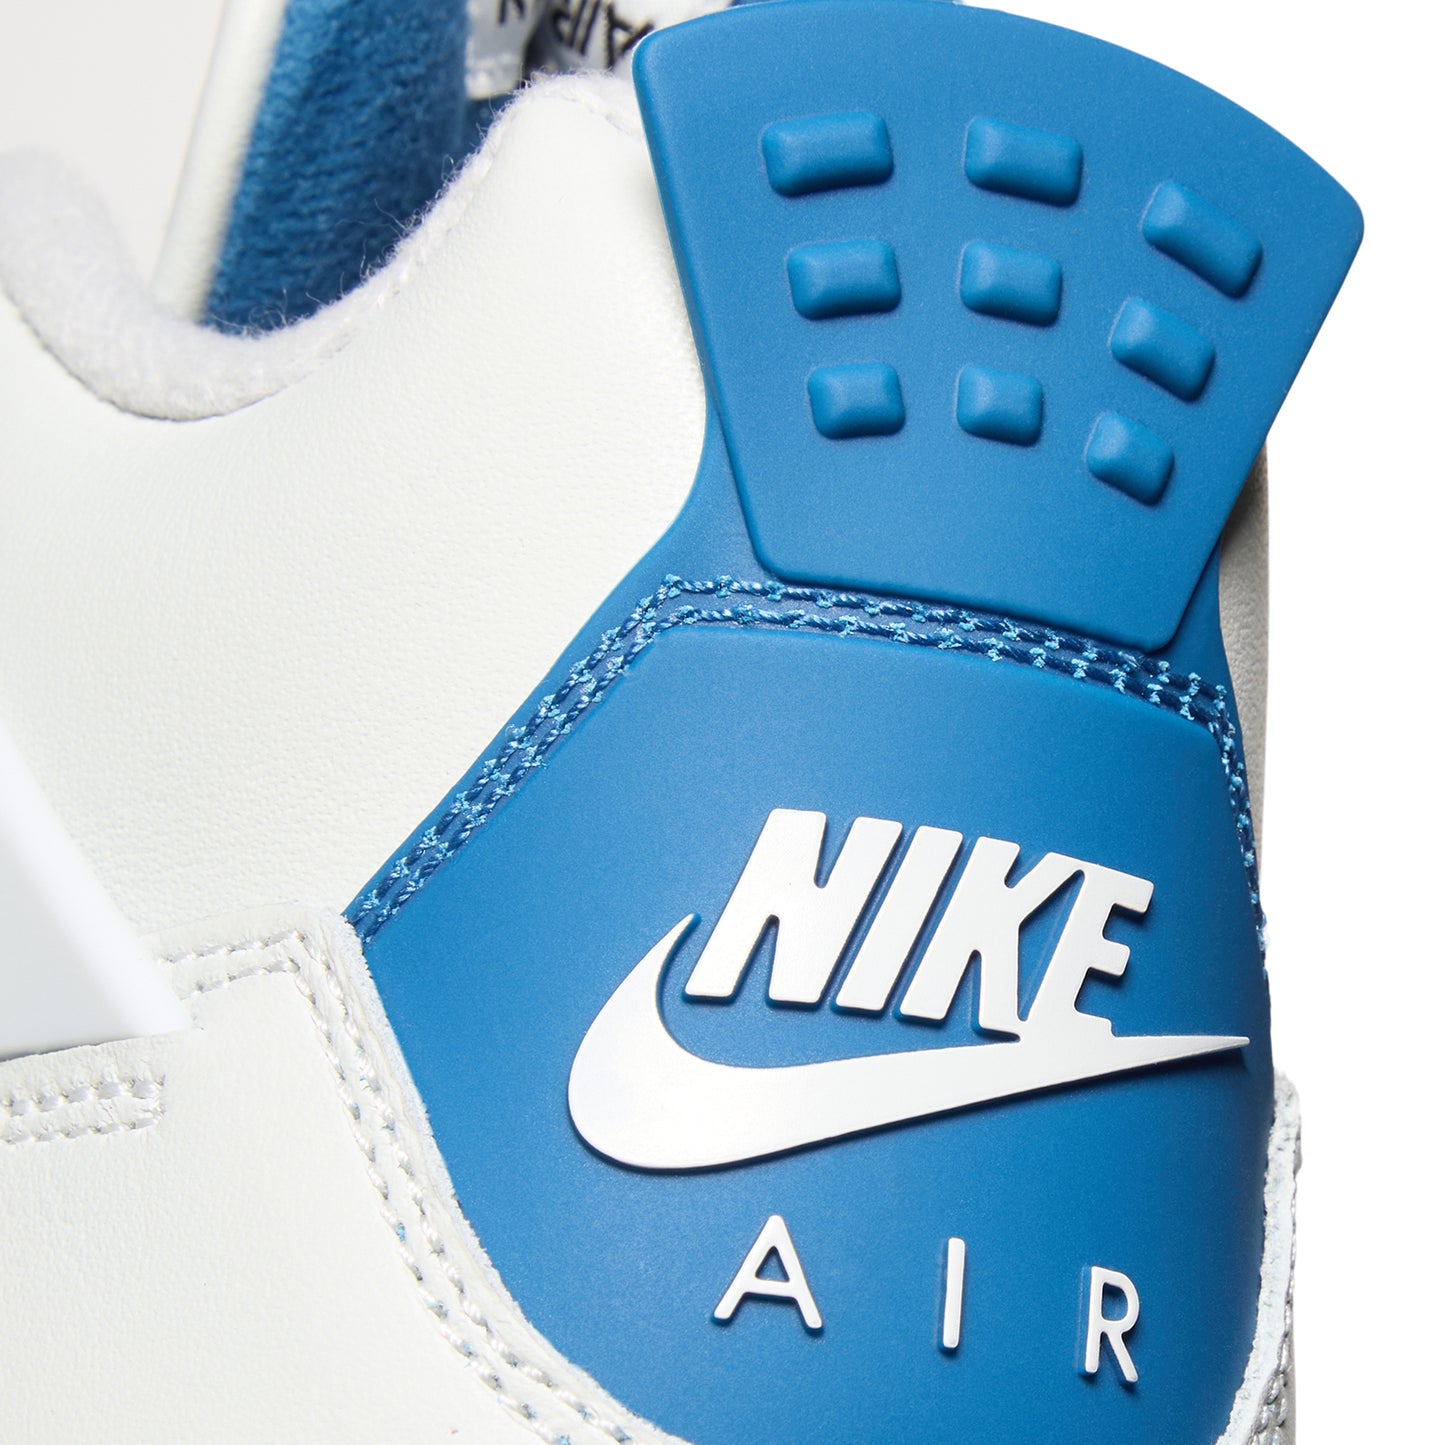 Nike Kids Air Jordan 4 Retro (Off White/Military Blue/Neutral Grey)